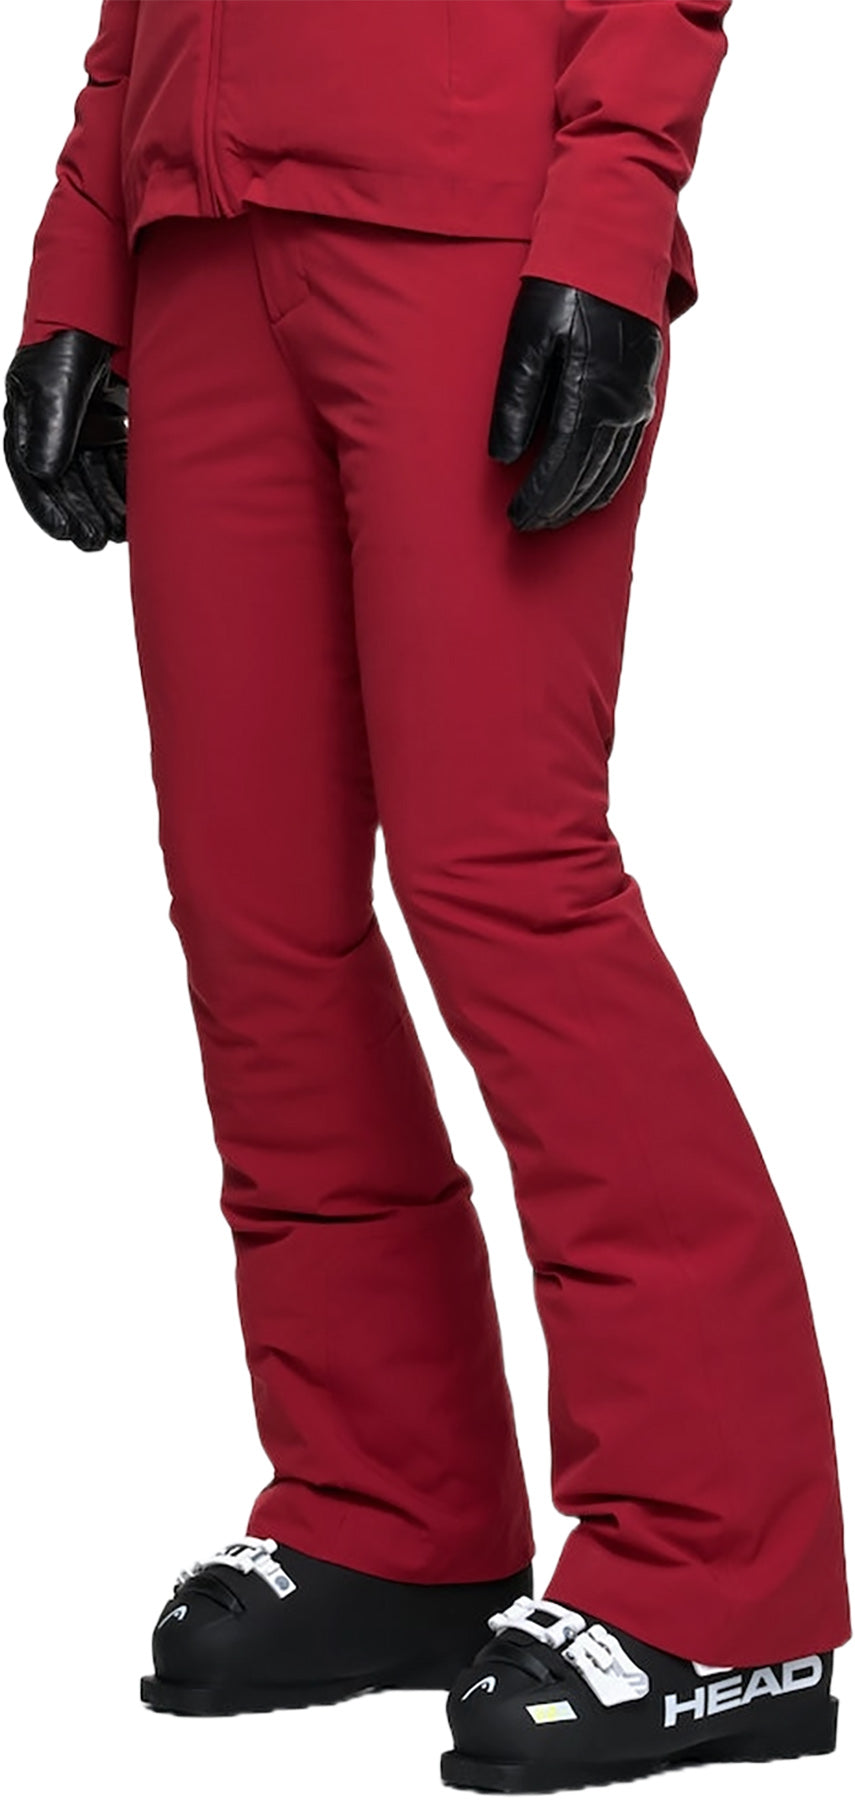 Sparkle & Fade Pants Womens 4 Red Black Stipe 31x28 Casual Comfort Ladies  Slacks